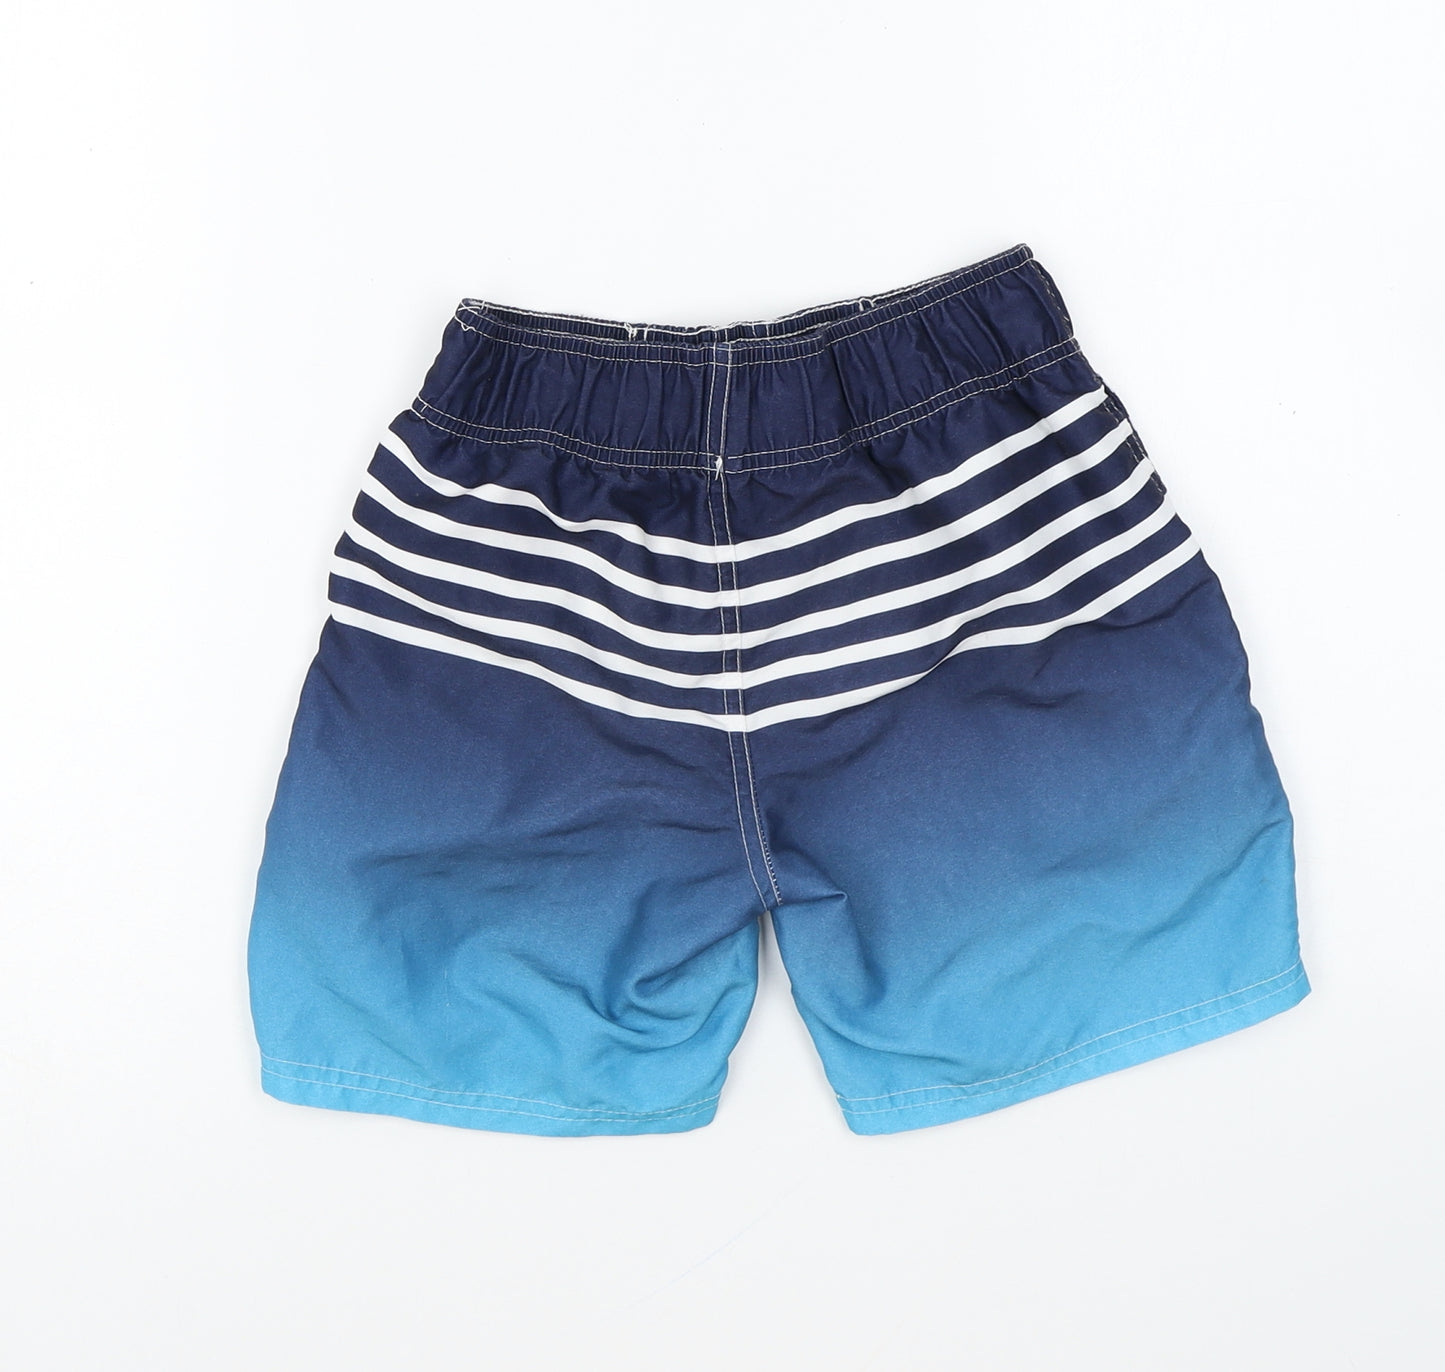 Primark Boys Blue Striped Polyester Sweat Shorts Size 7-8 Years Regular Drawstring - Swim Shorts